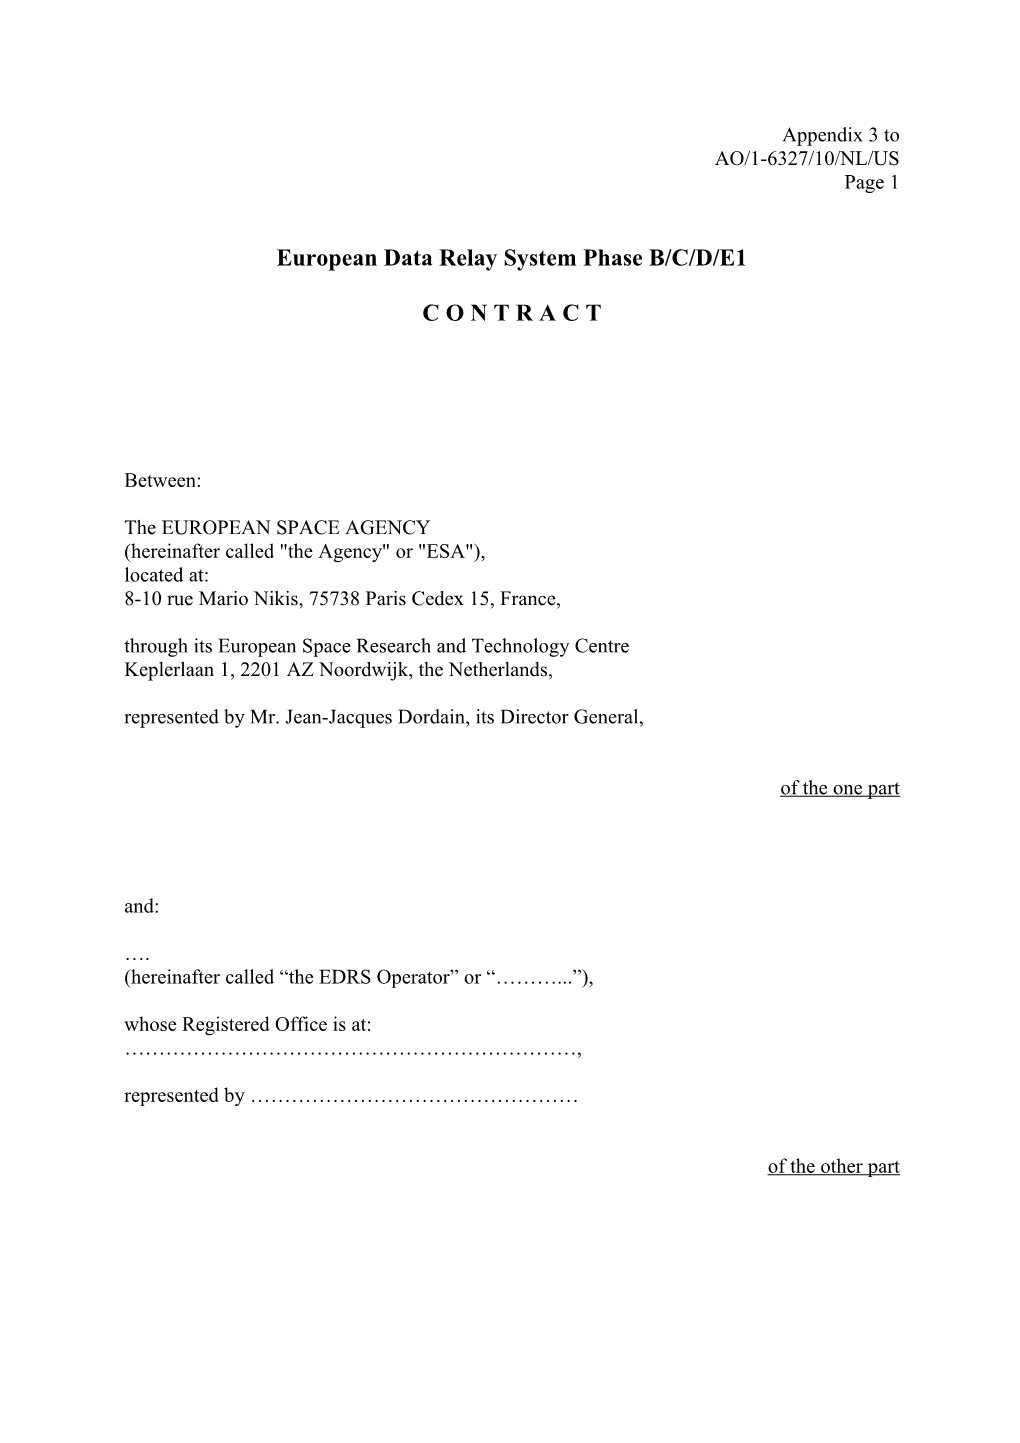 European Data Relay System Phase B/C/D/E1